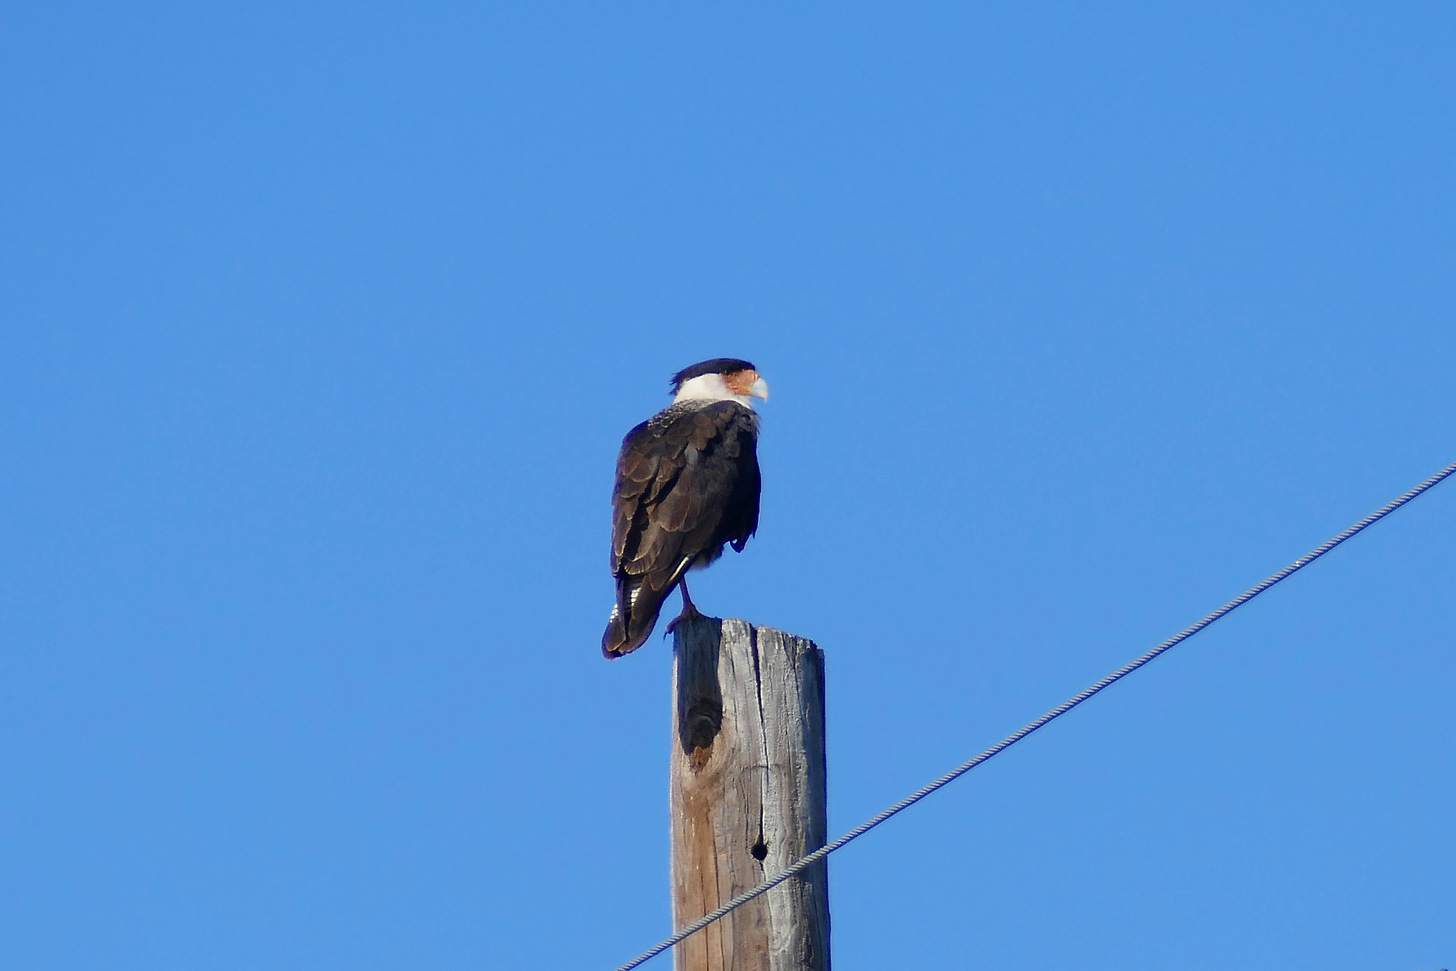 Caracara on a telephone pole against the background of a clear blue sky